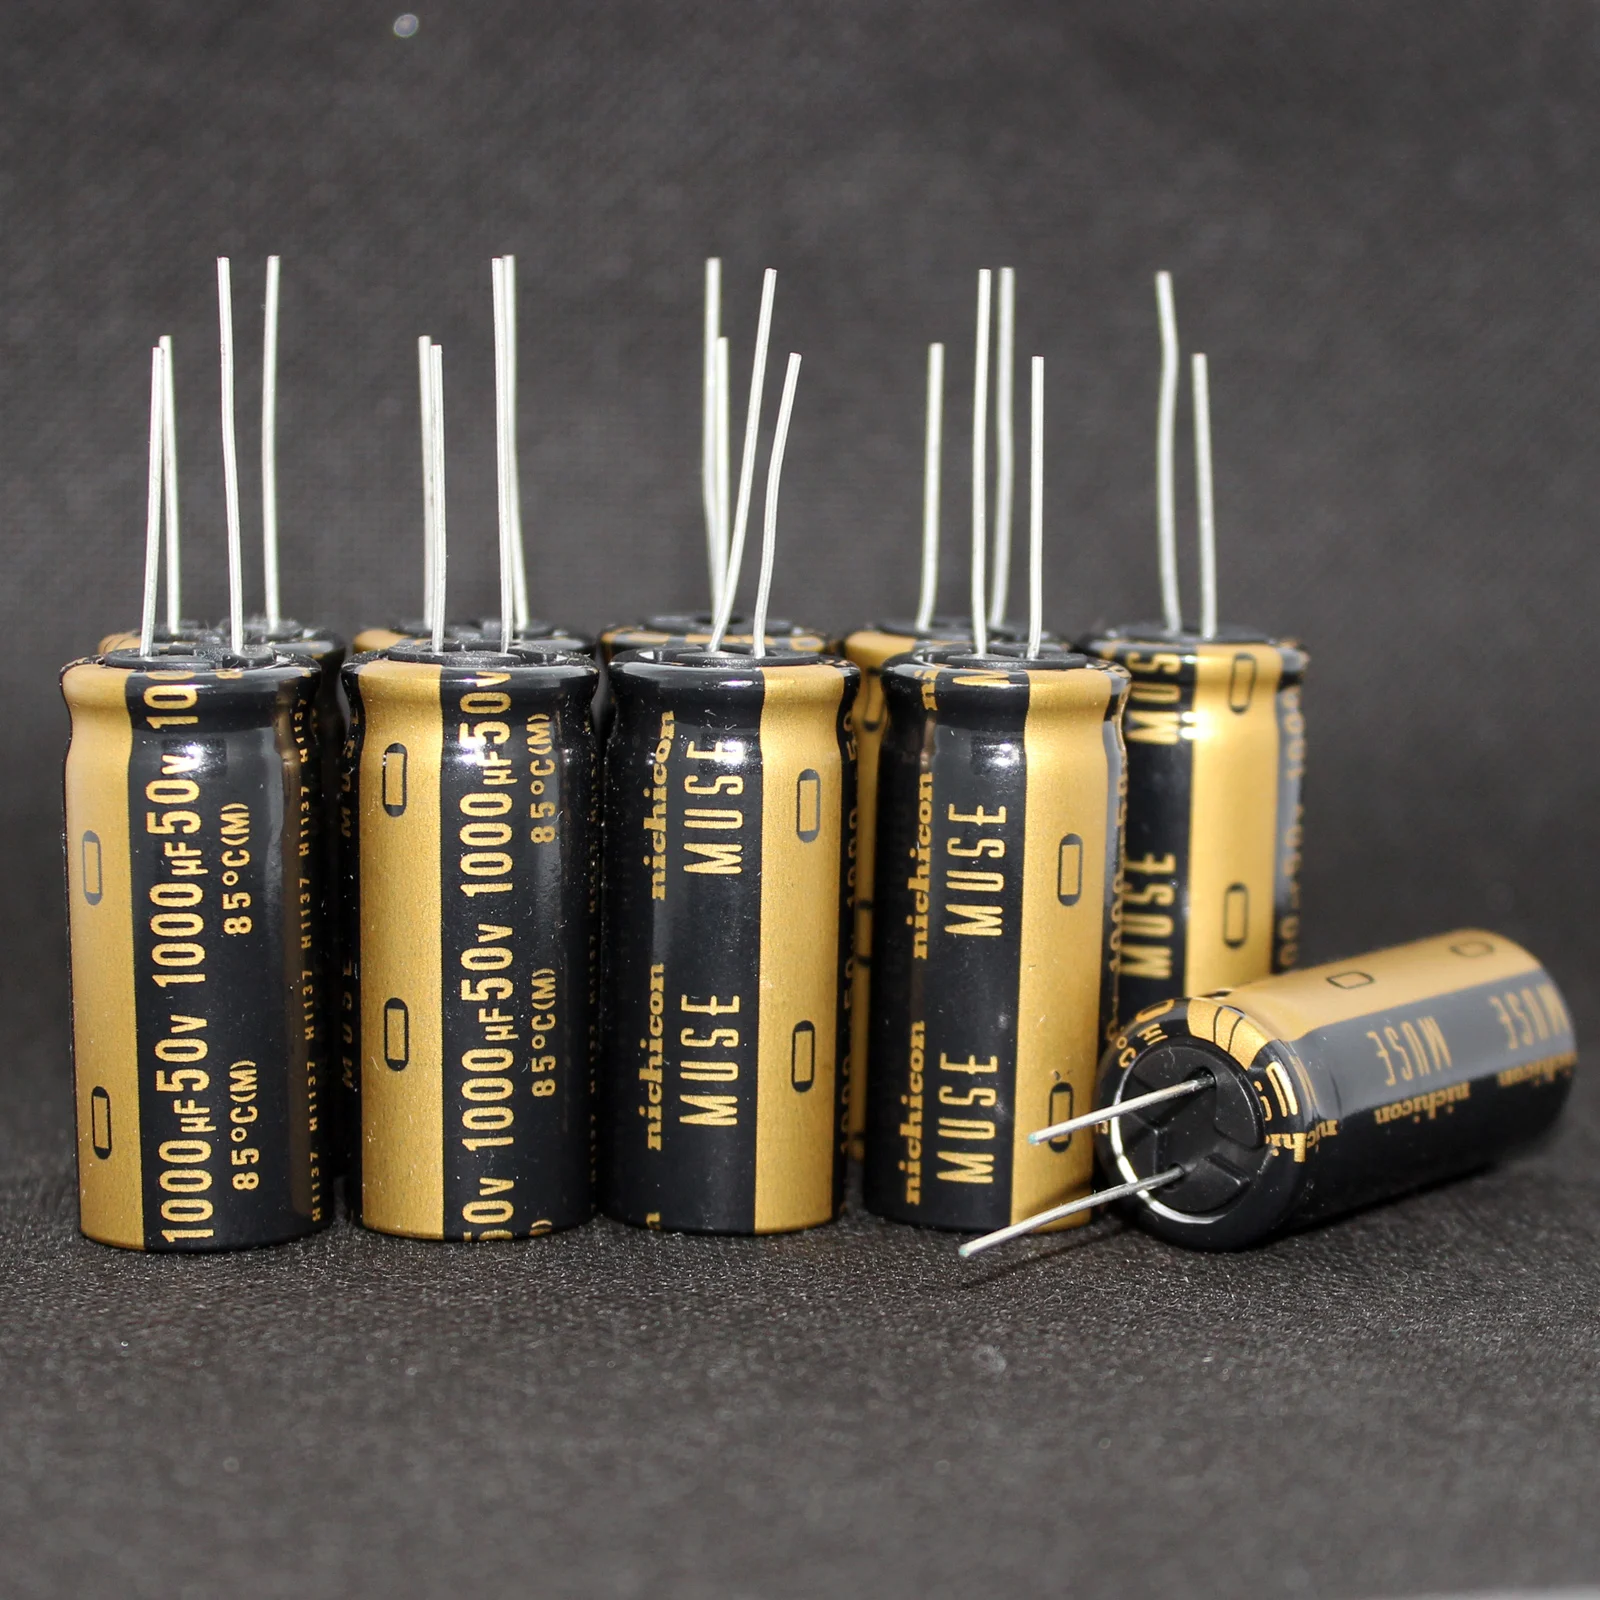 30pcs/lot Original nichicon MUSE KZ series fever capacitor audio aluminum electrolytic capacitor free shipping